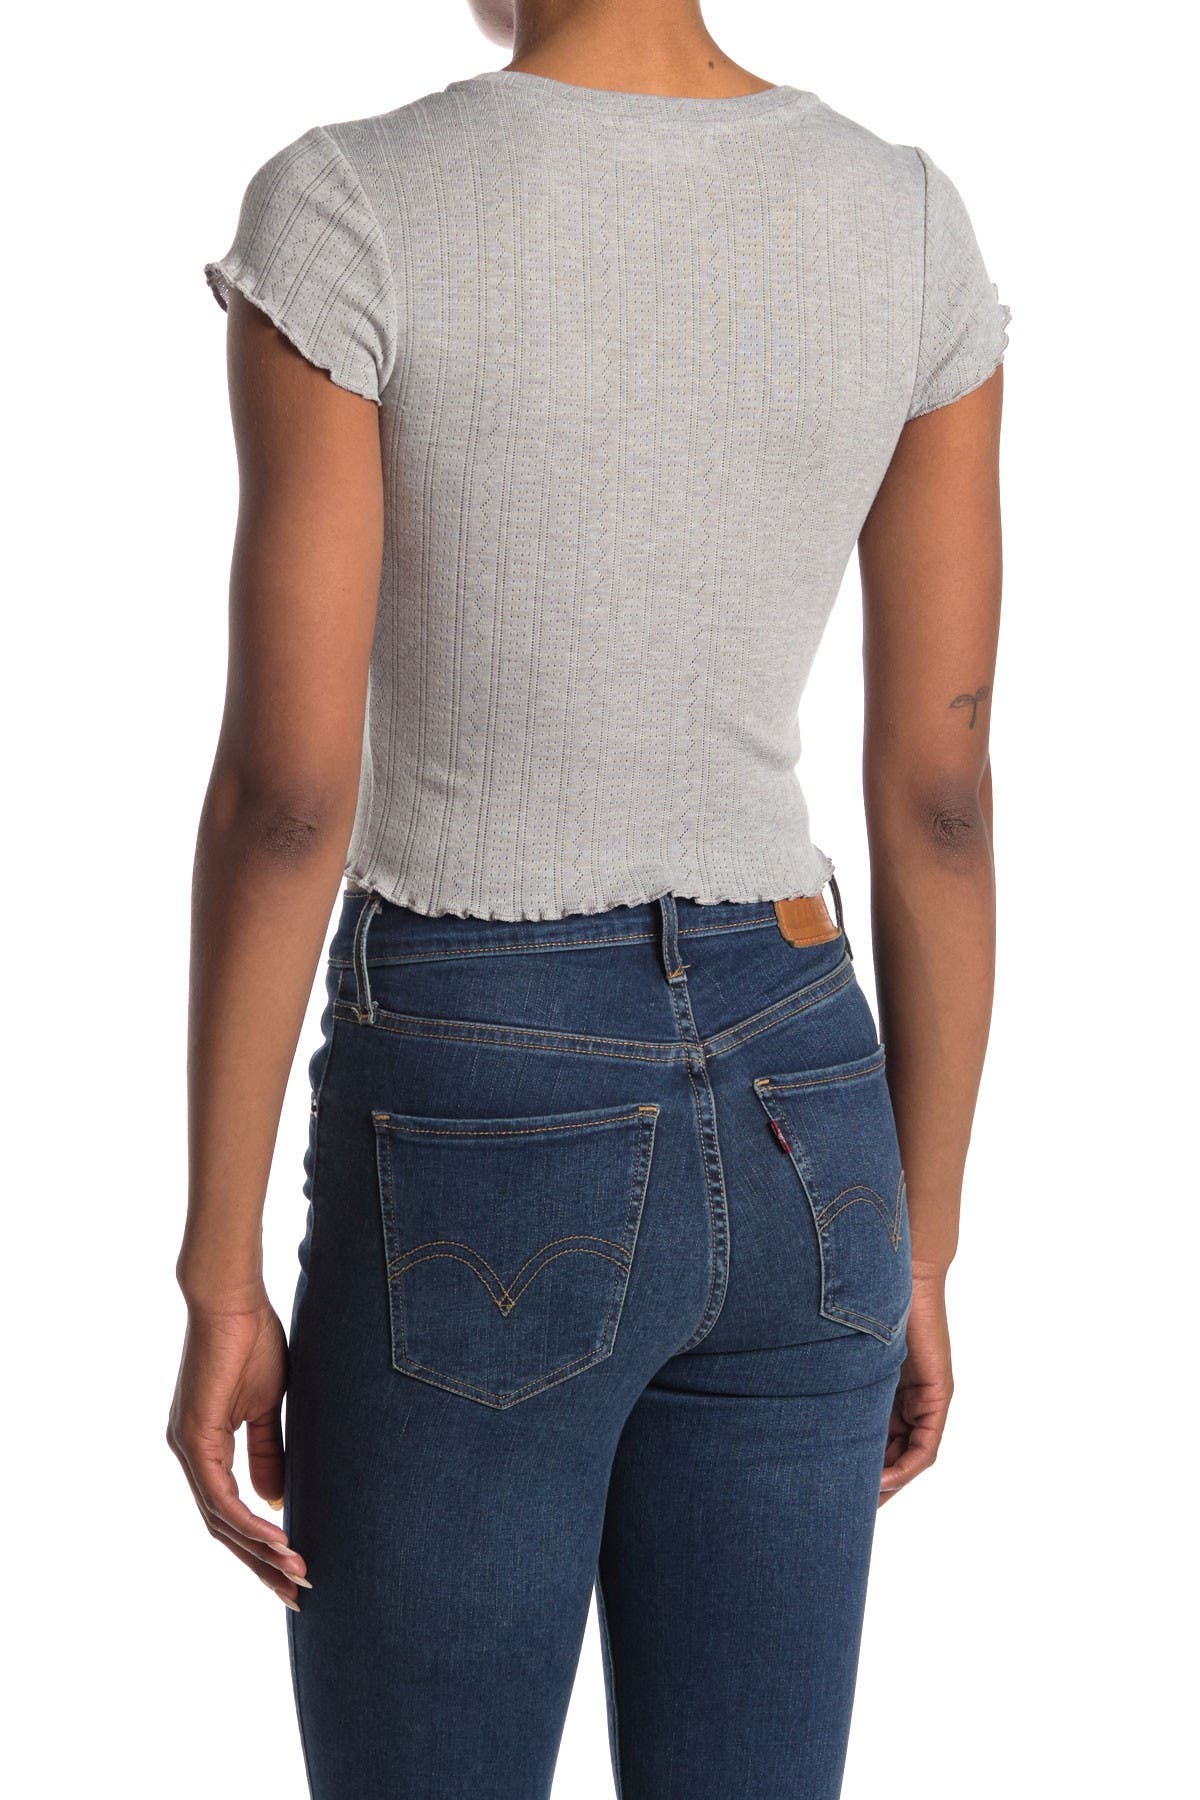 Off the Shoulder Tops Long Sleeve Tee Shirt Women Rib Knit Lettuce Edge Crop Bar